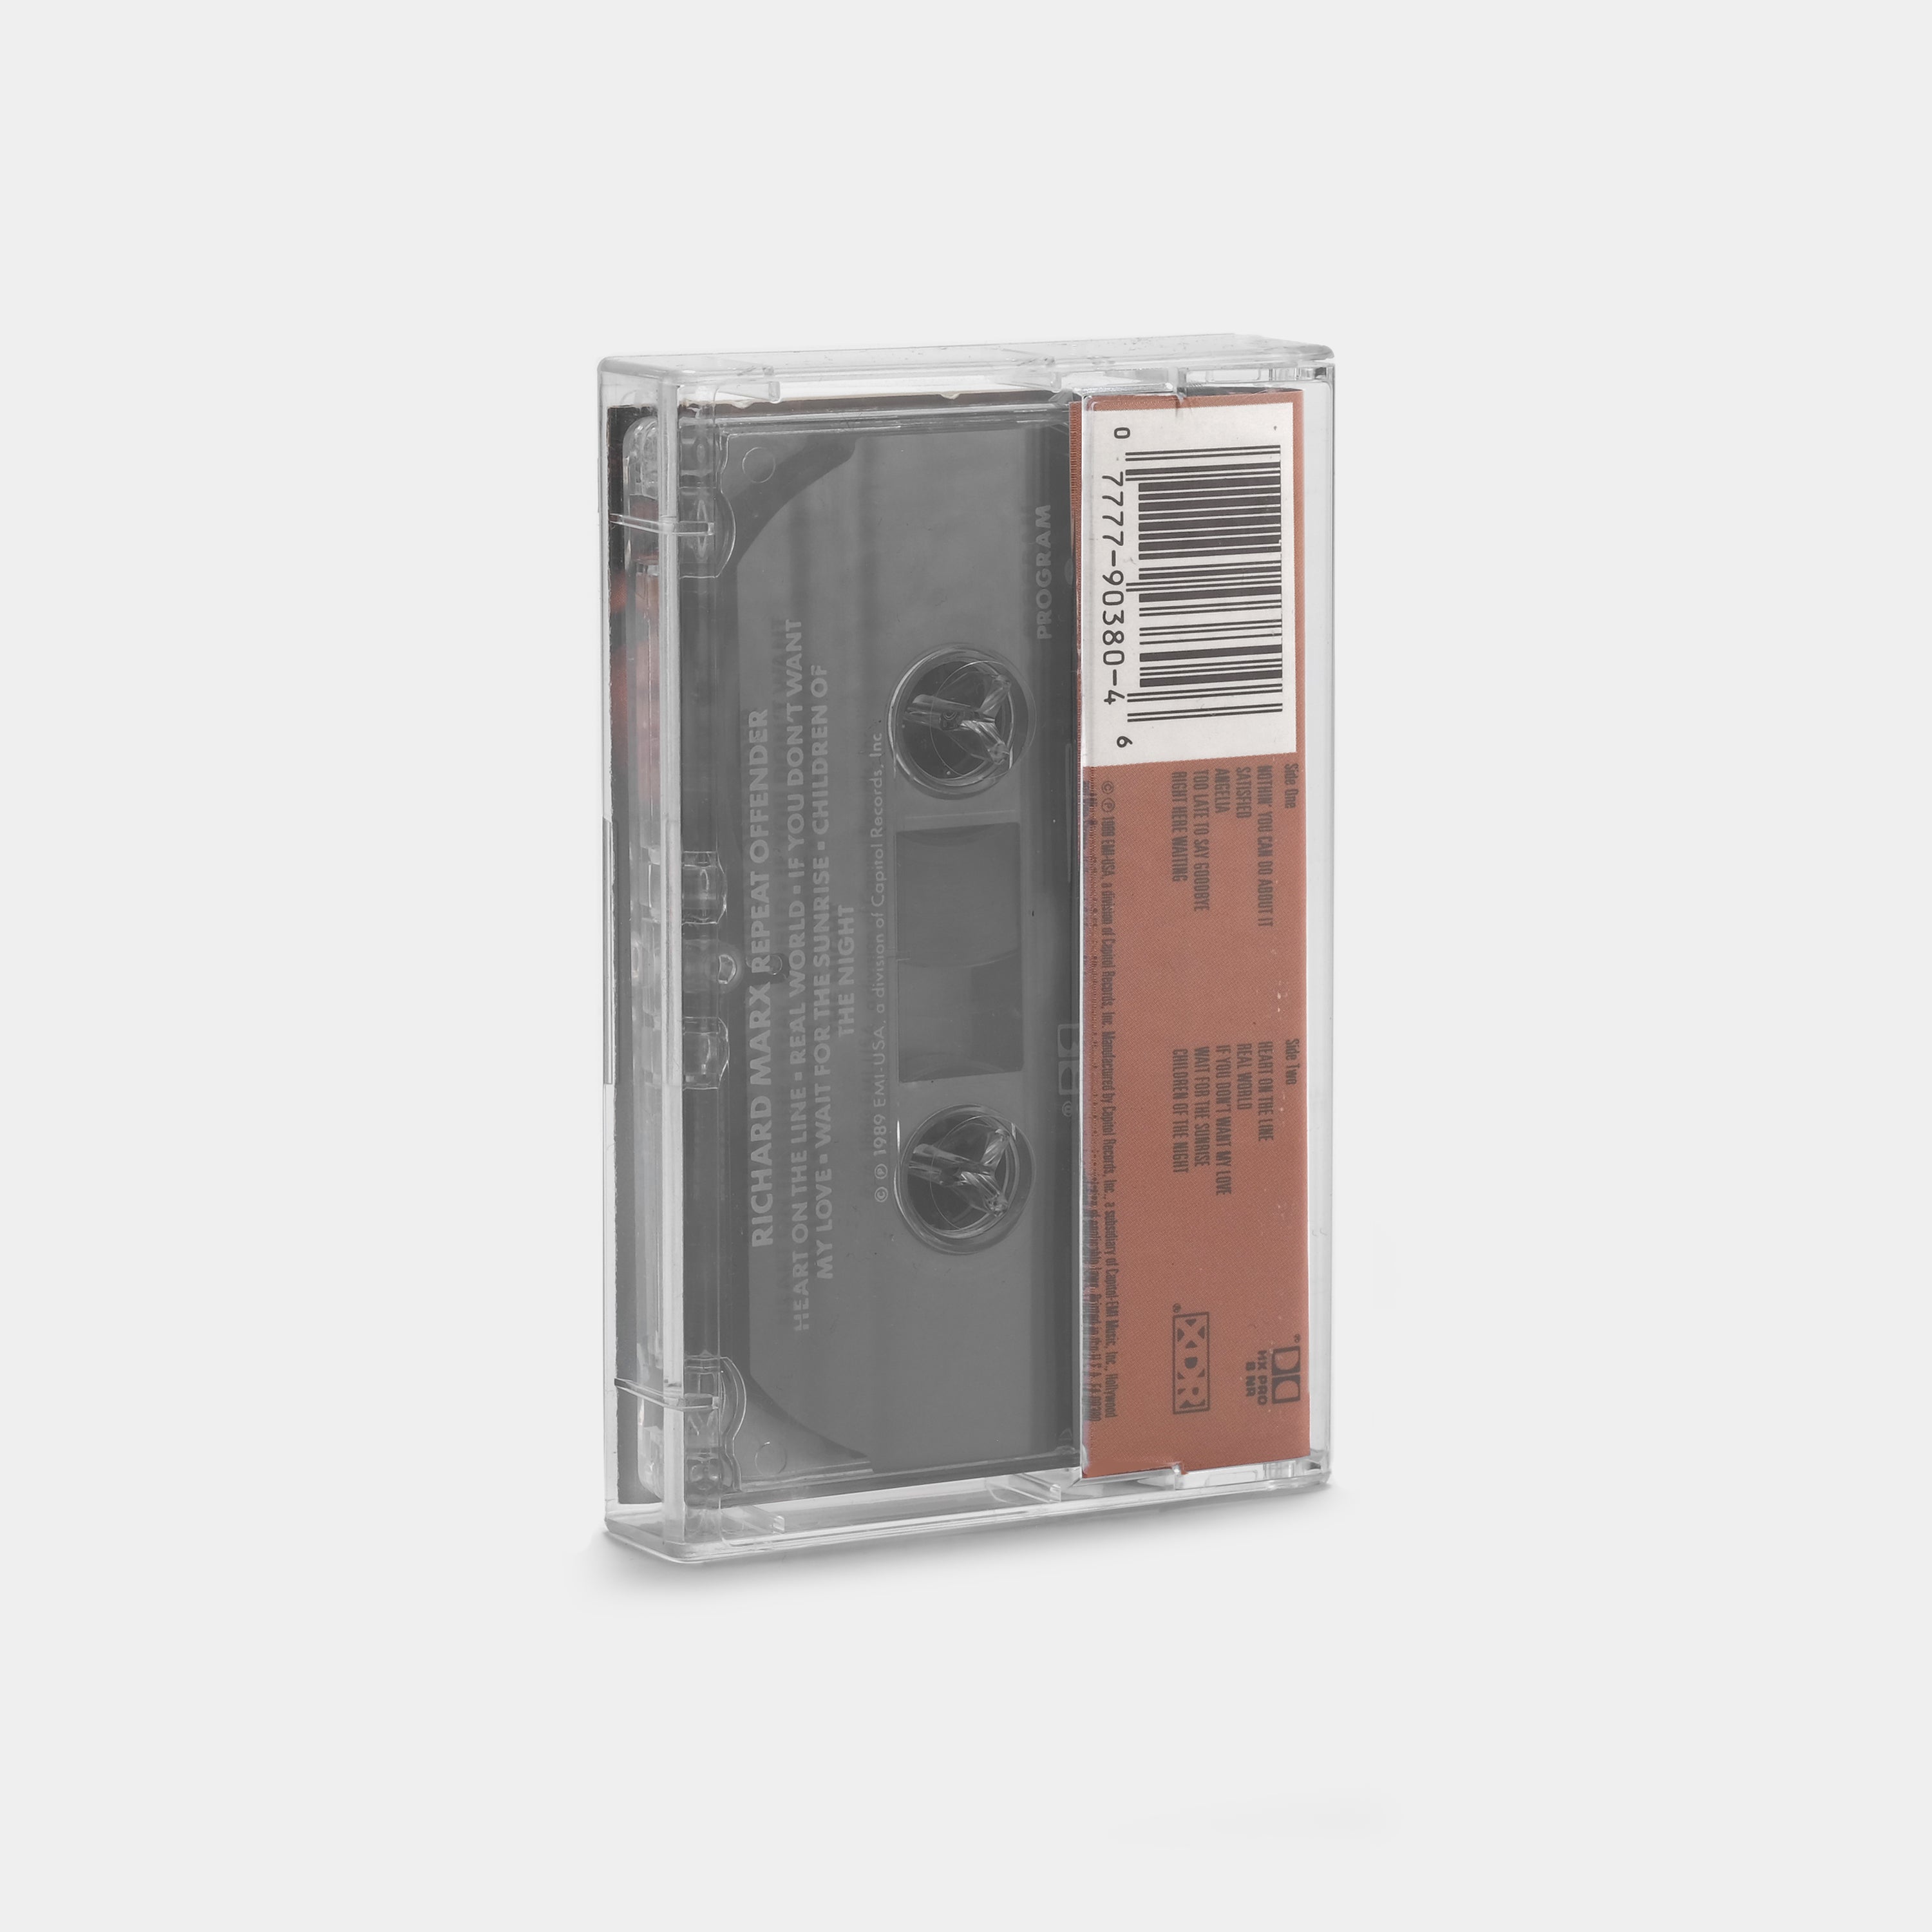 Richard Marx - Repeat Offender Cassette Tape